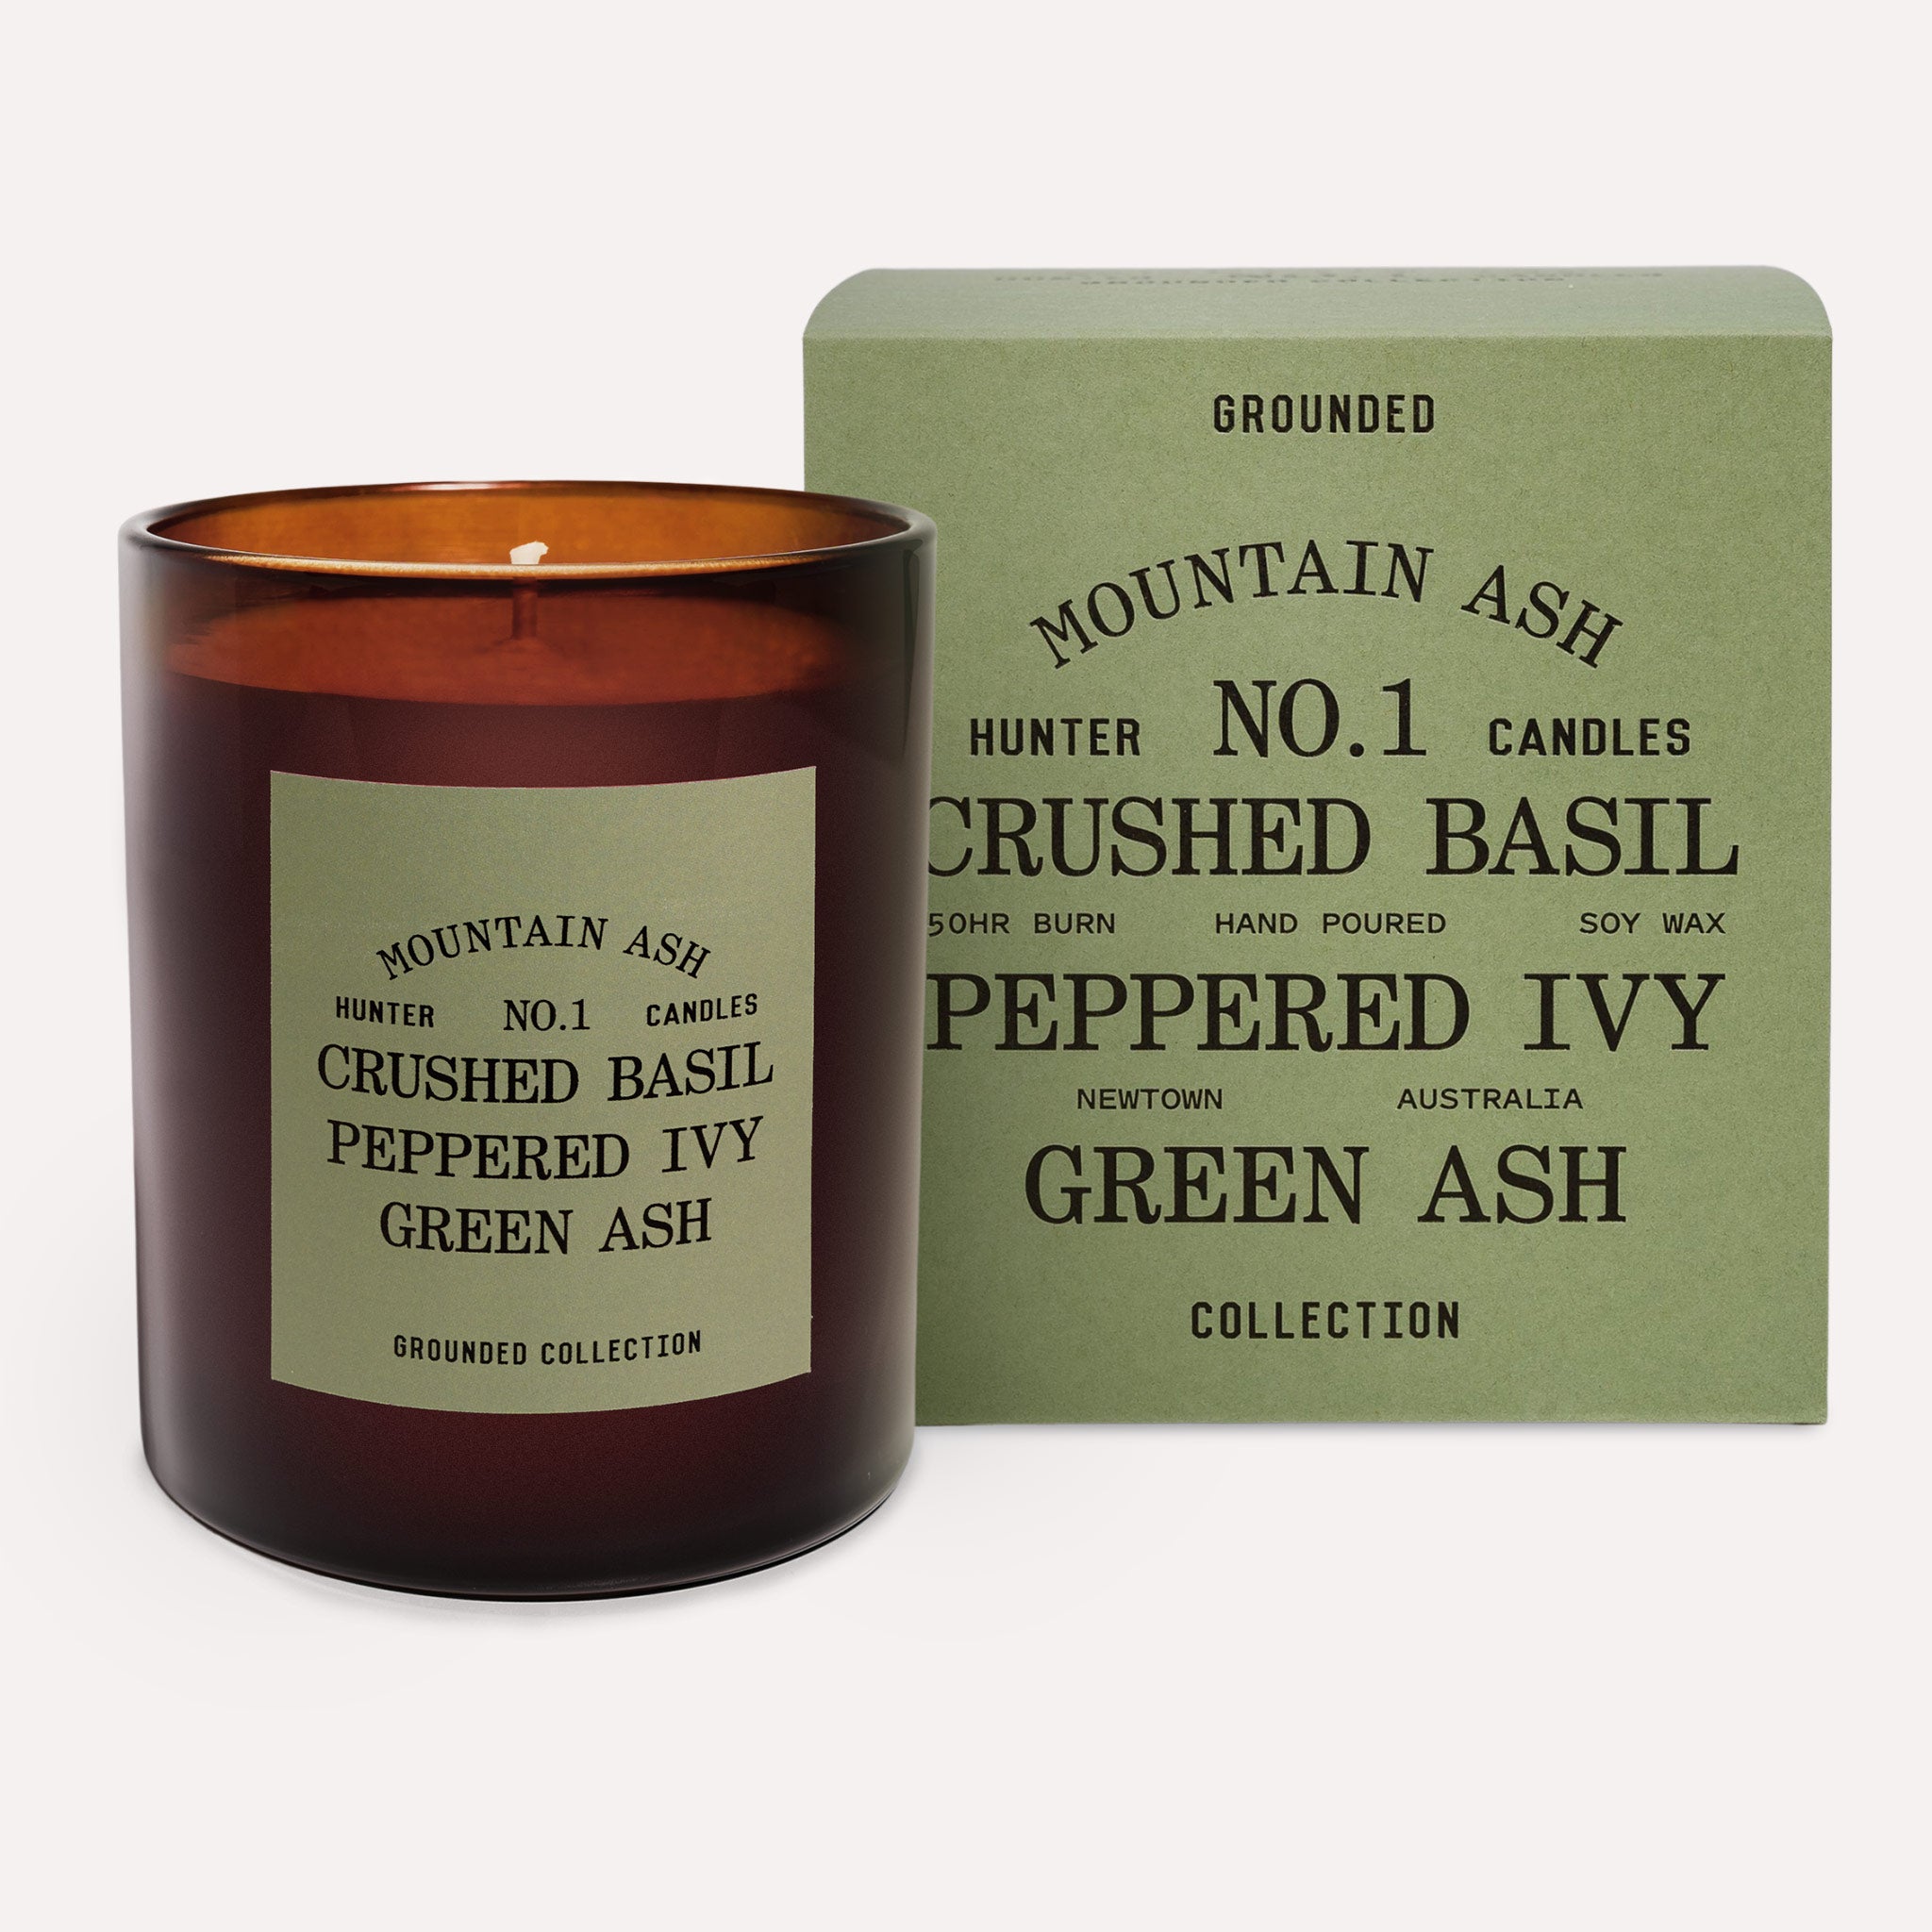 NO. 1 MOUNTAIN ASH / crushed basil, peppered ivy, green ash